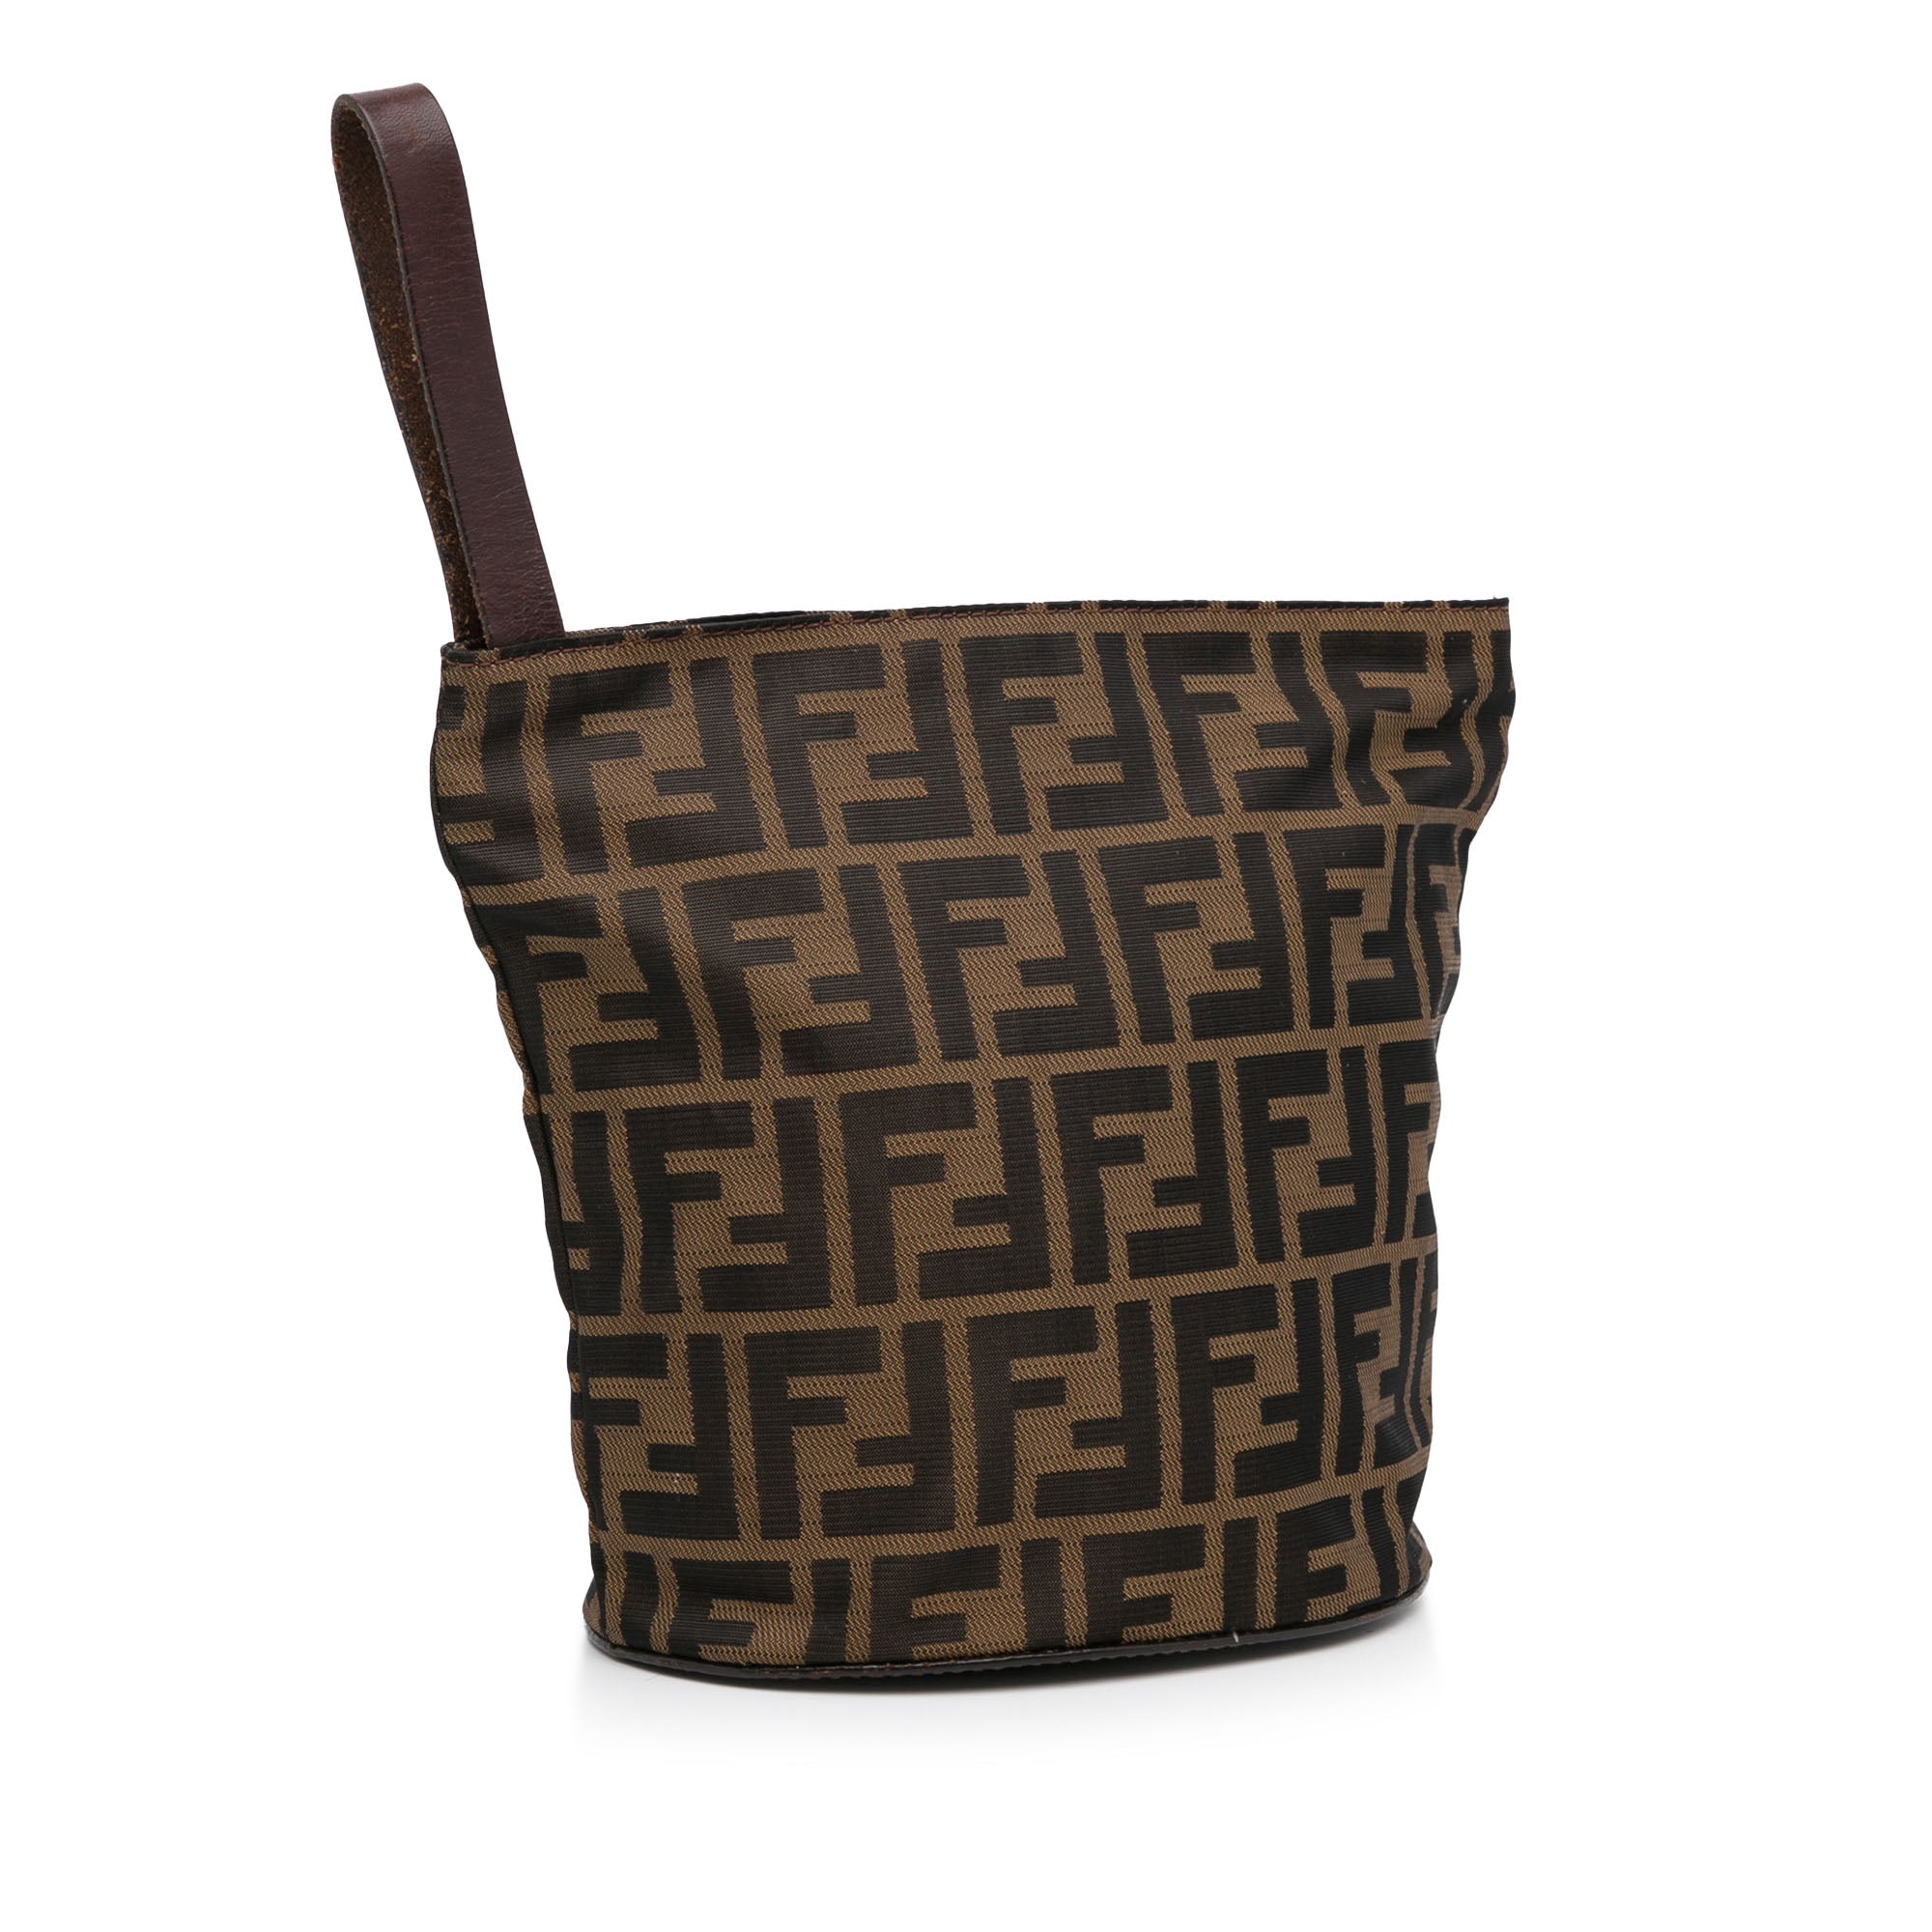 Fendi - Authenticated Croissant Vintage Handbag - Cotton Brown for Women, Very Good Condition